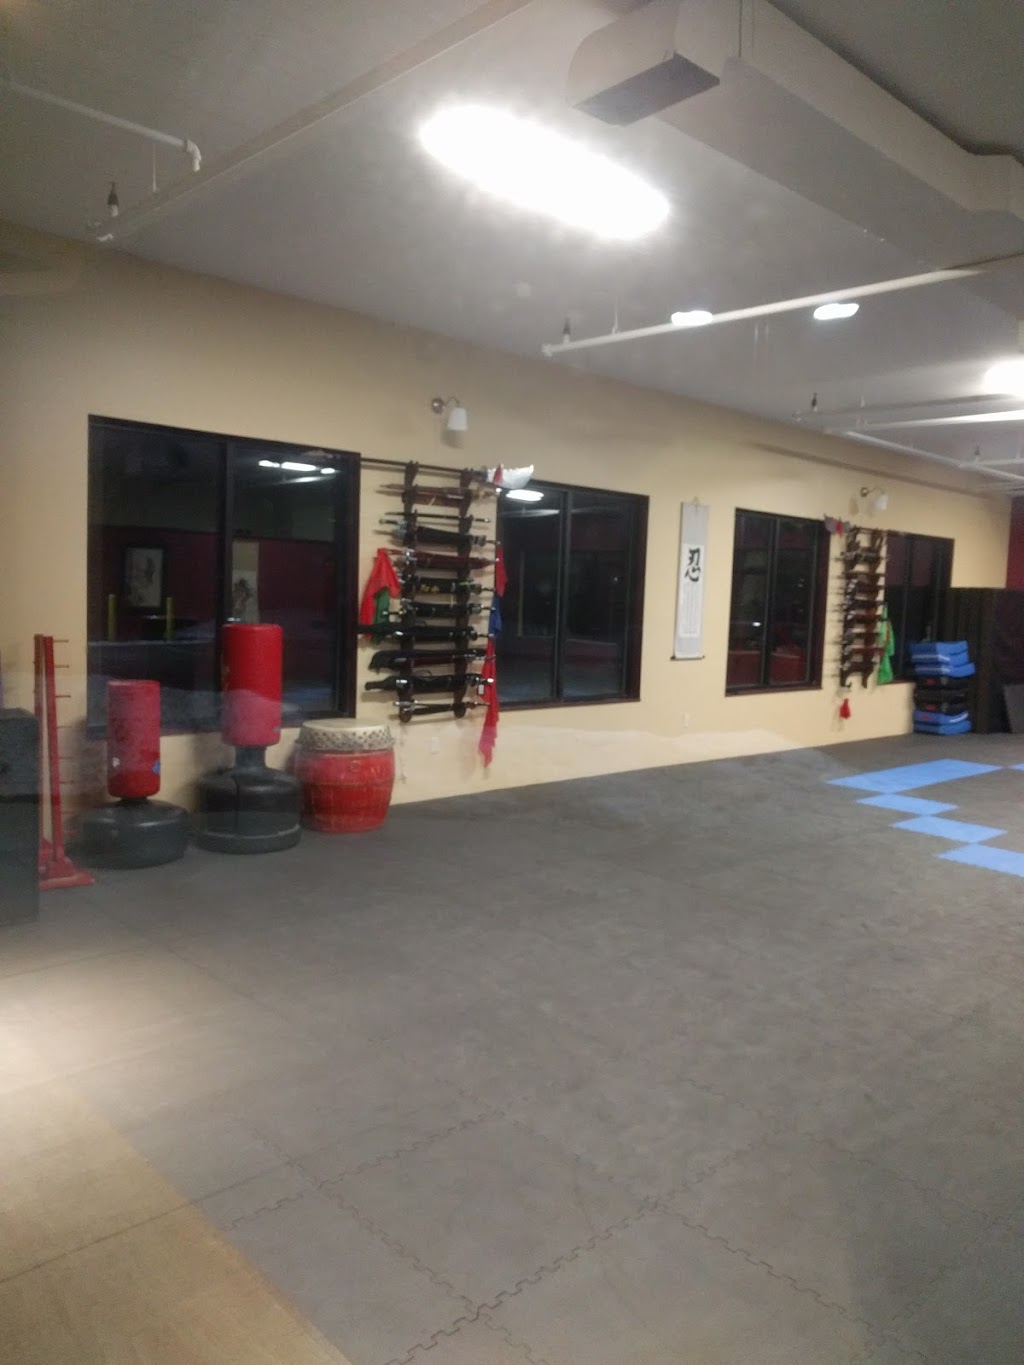 Shaolin Kung Fu Center of Hadley | 37 Lawrence Plain Rd, Hadley, MA 01035 | Phone: (413) 364-7734